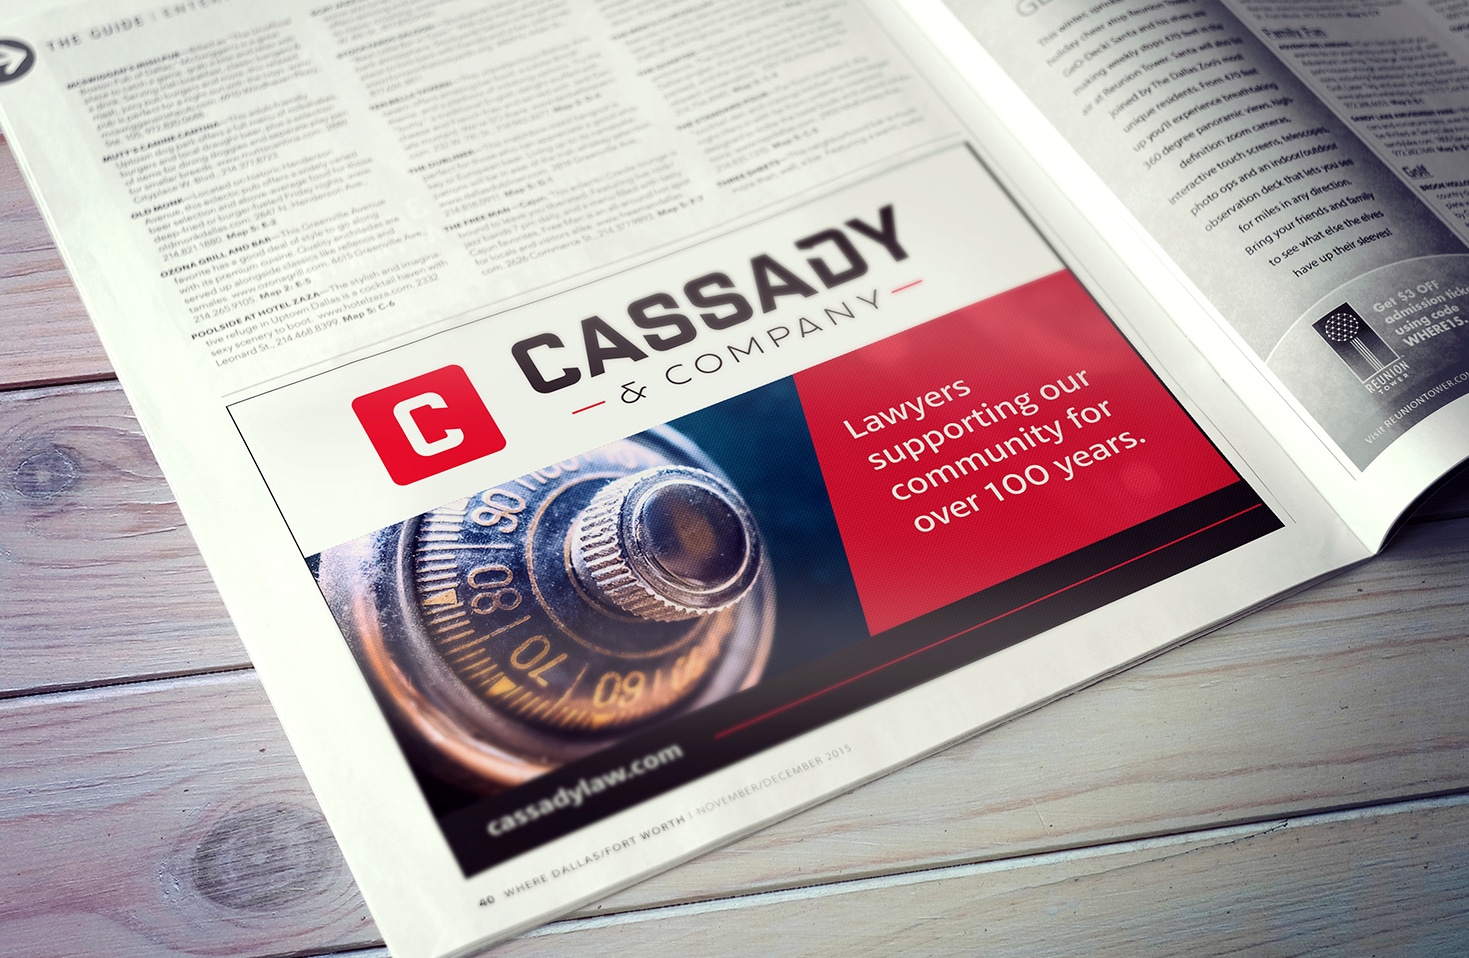 Magazine ad for Cassady & Company